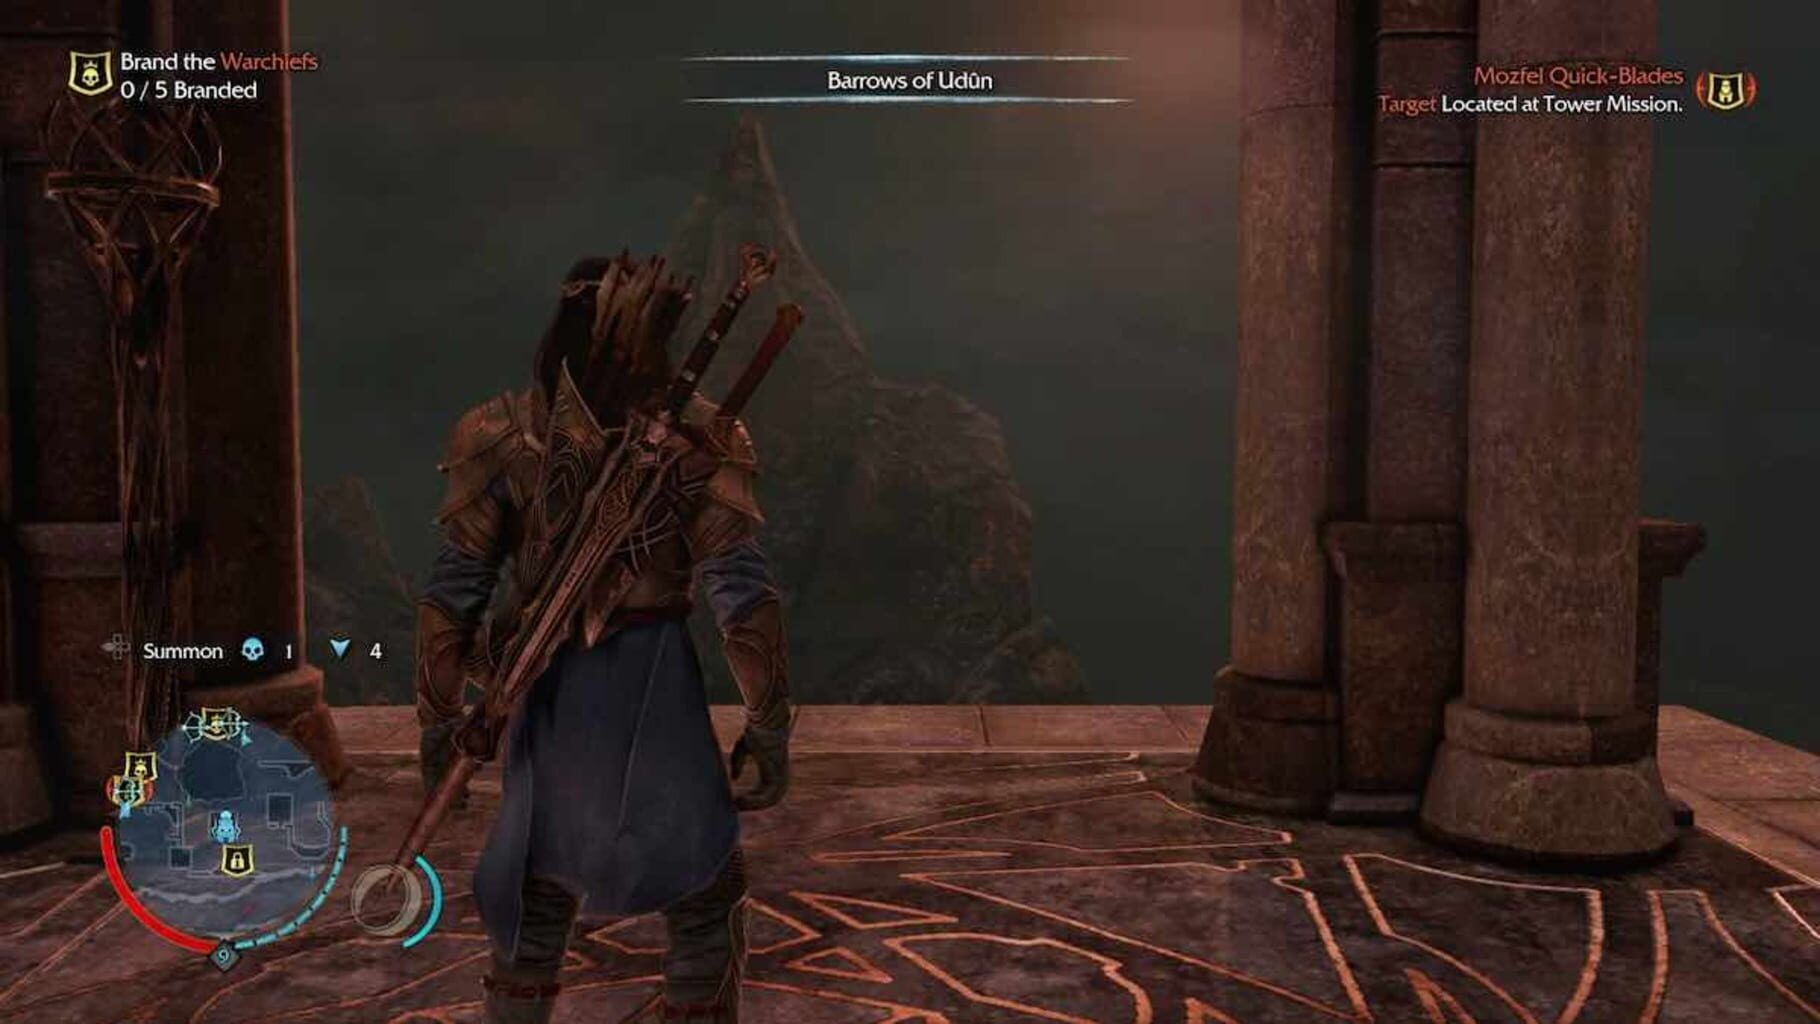 Captura de pantalla - Middle-earth: Shadow of Mordor - The Bright Lord